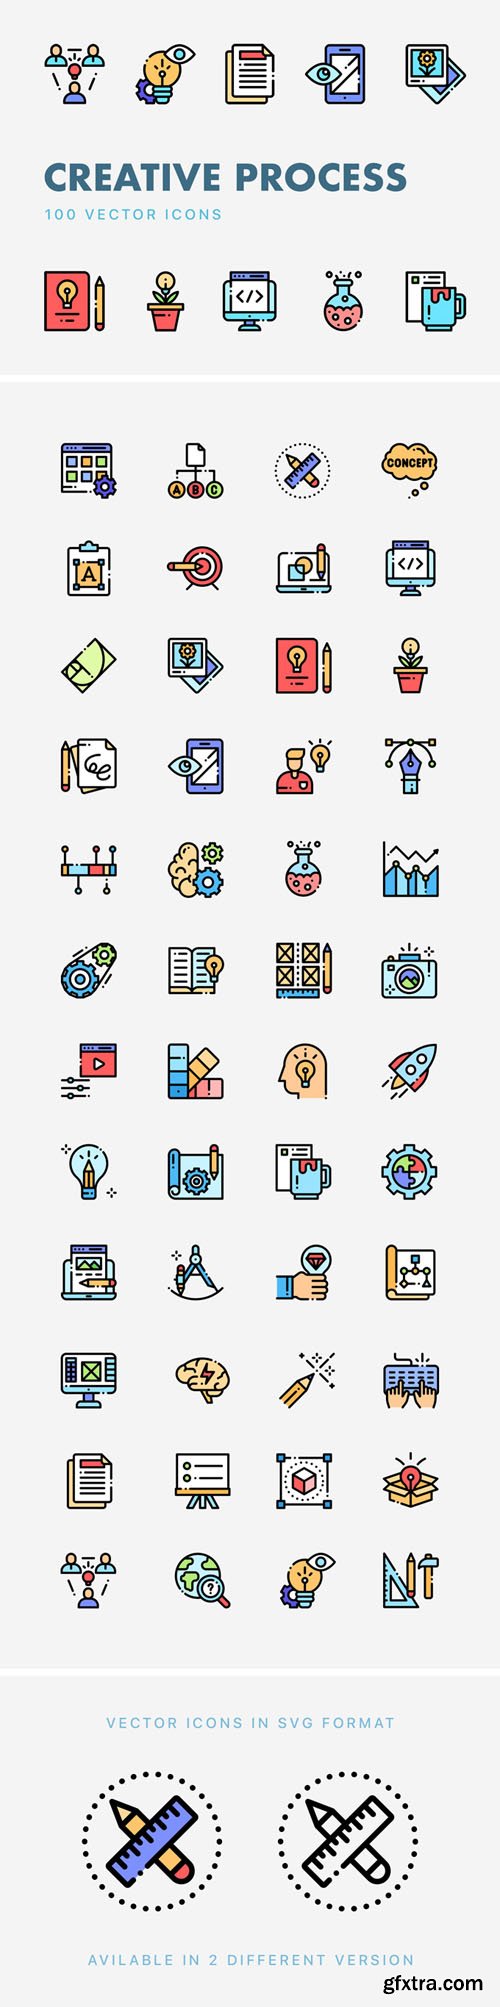 Creative Process 100 Vector Icons